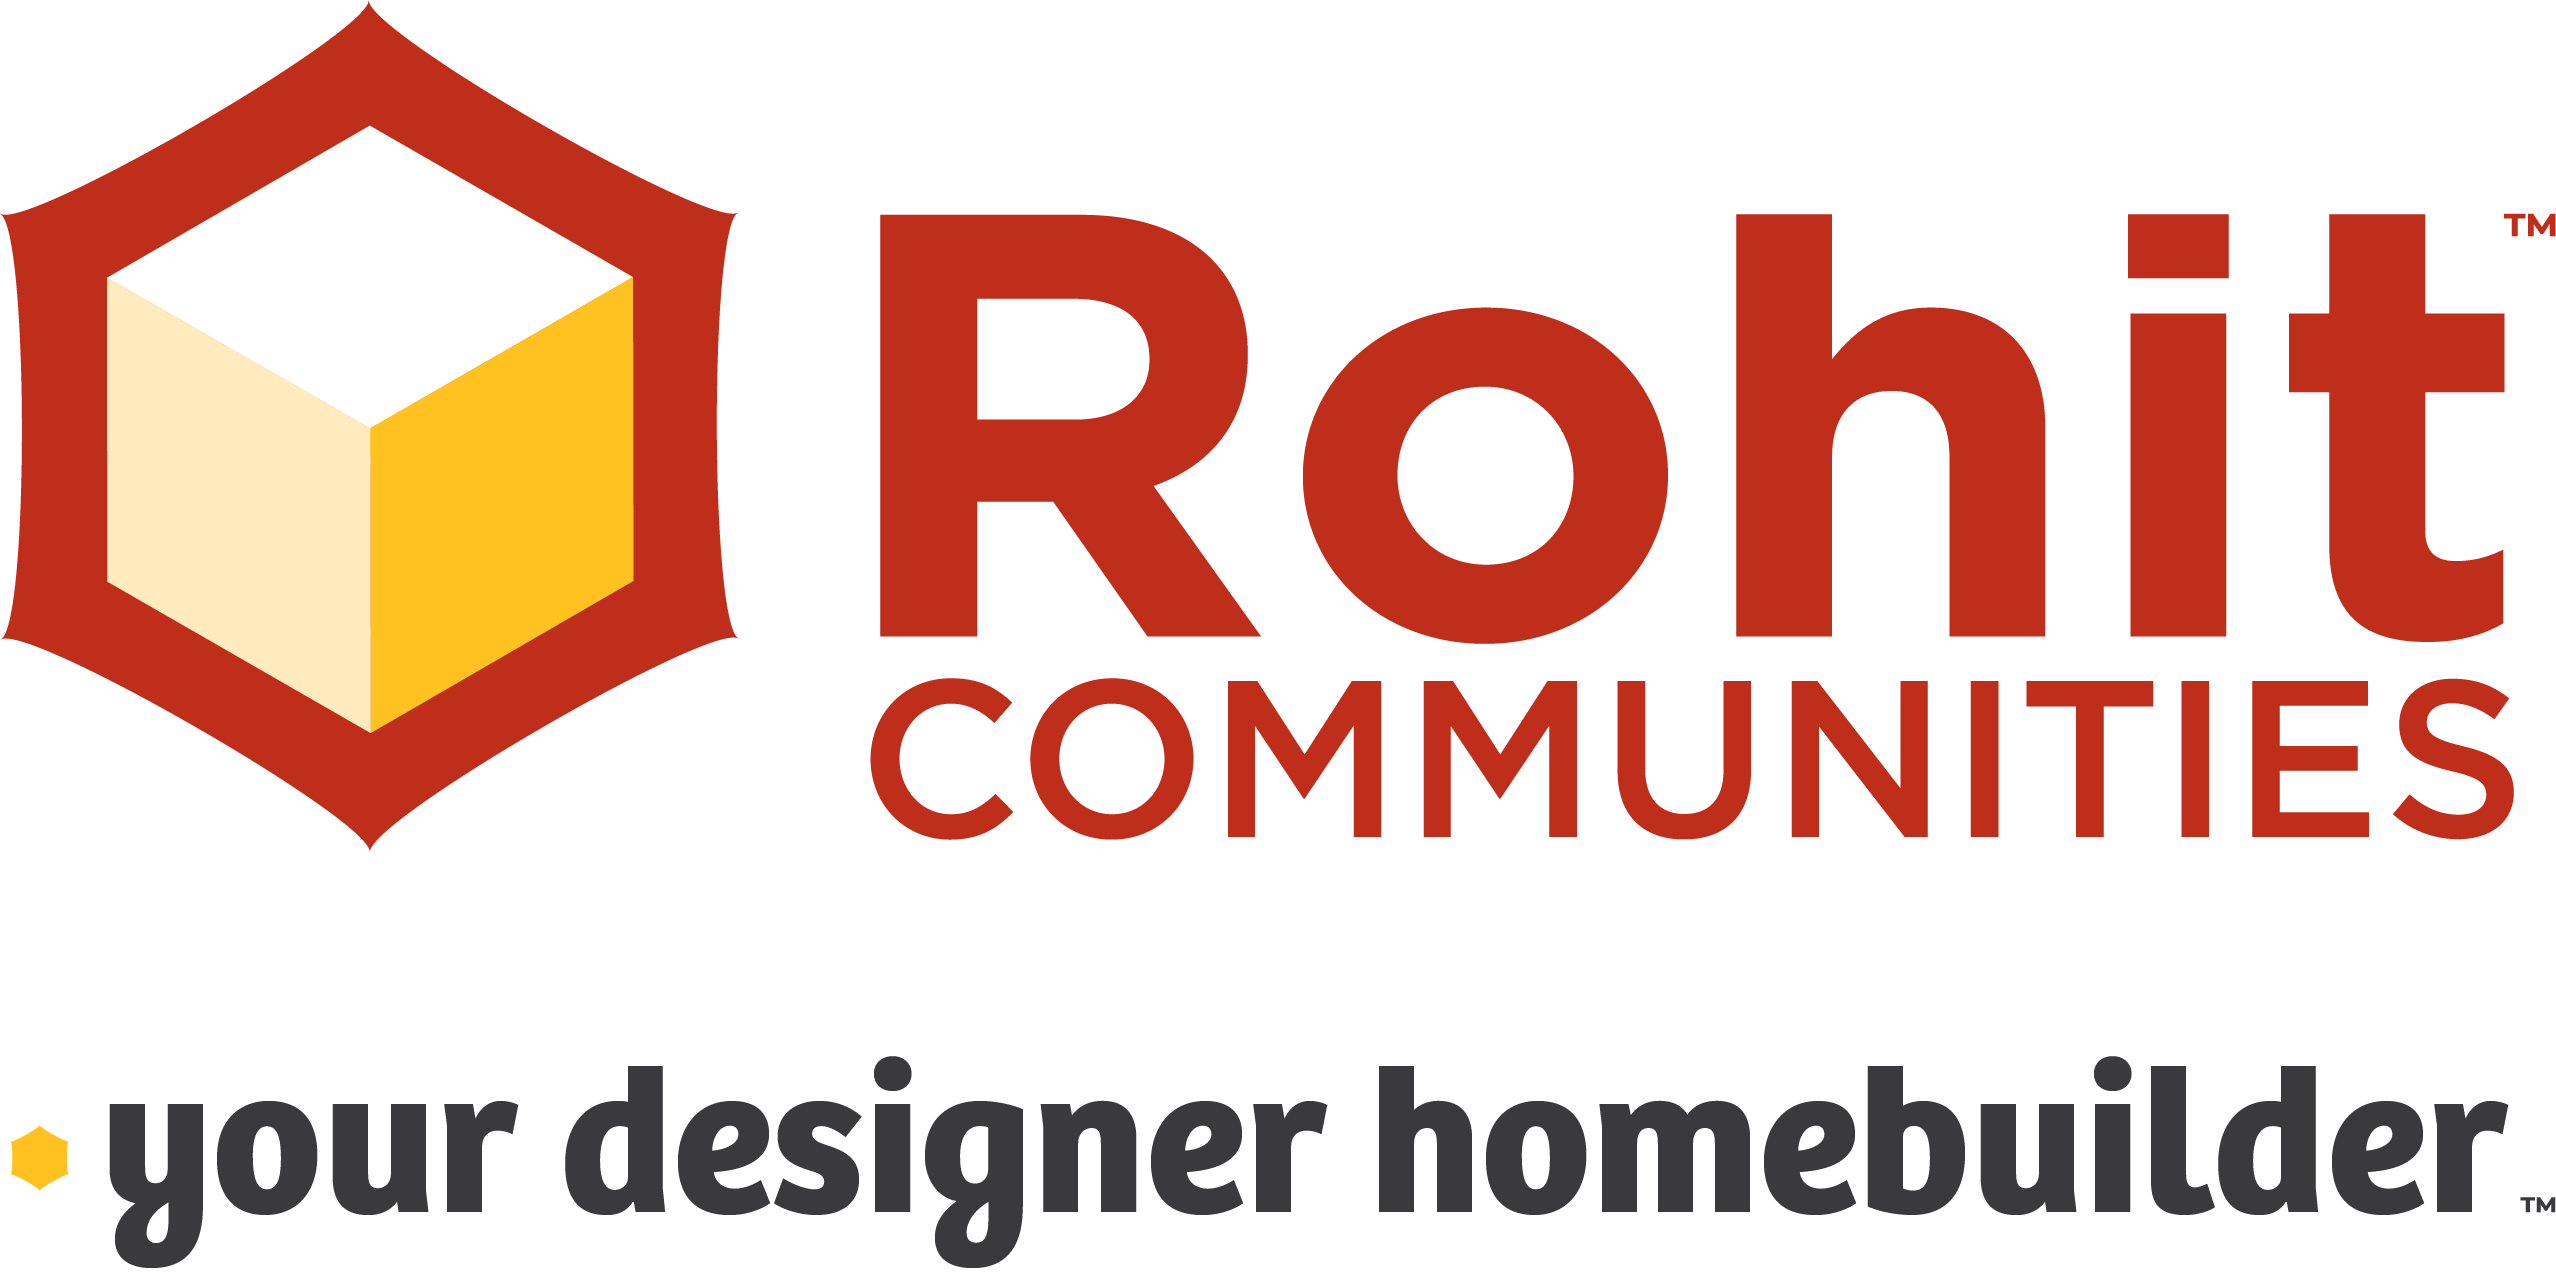 cobblestone creek rohit homebuilder logo